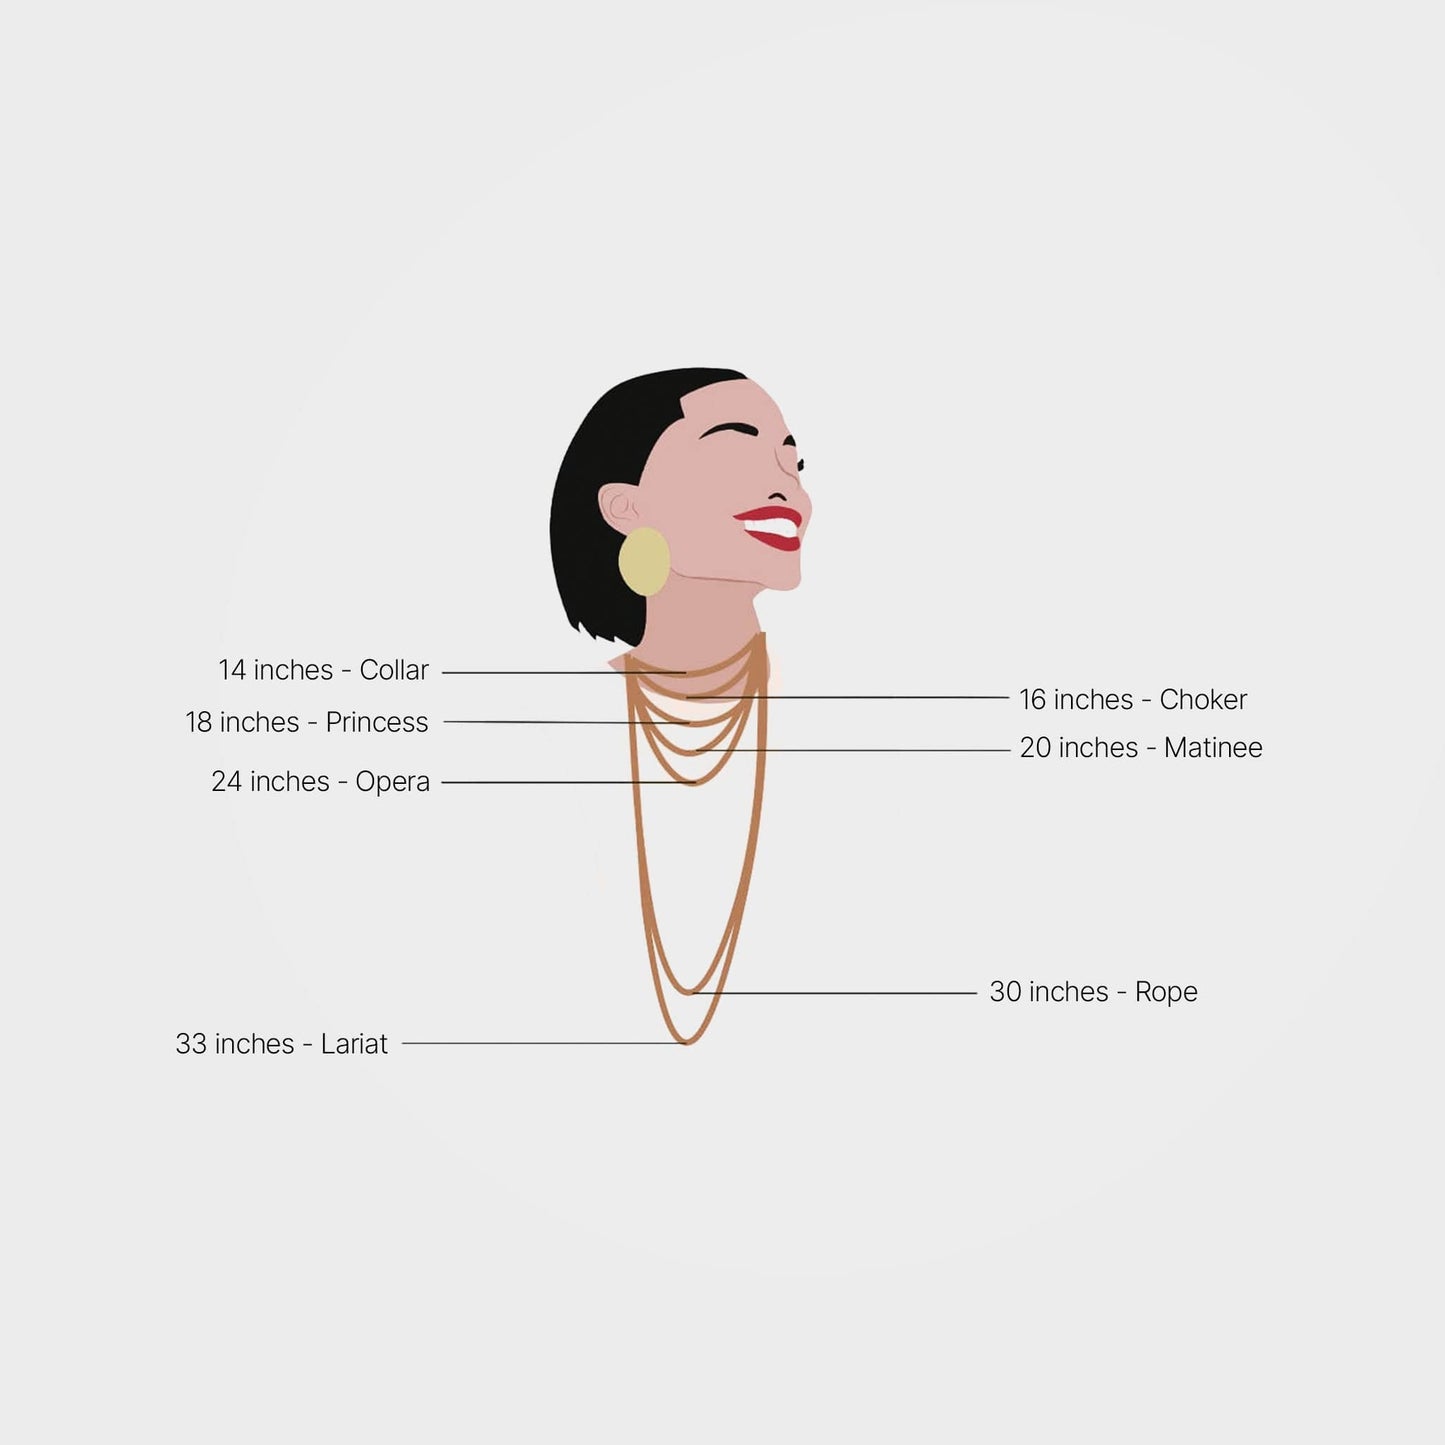 Goldener oder Silberner Muschel-Anhänger Halskette – Jakobsmuschel | By Lunar James